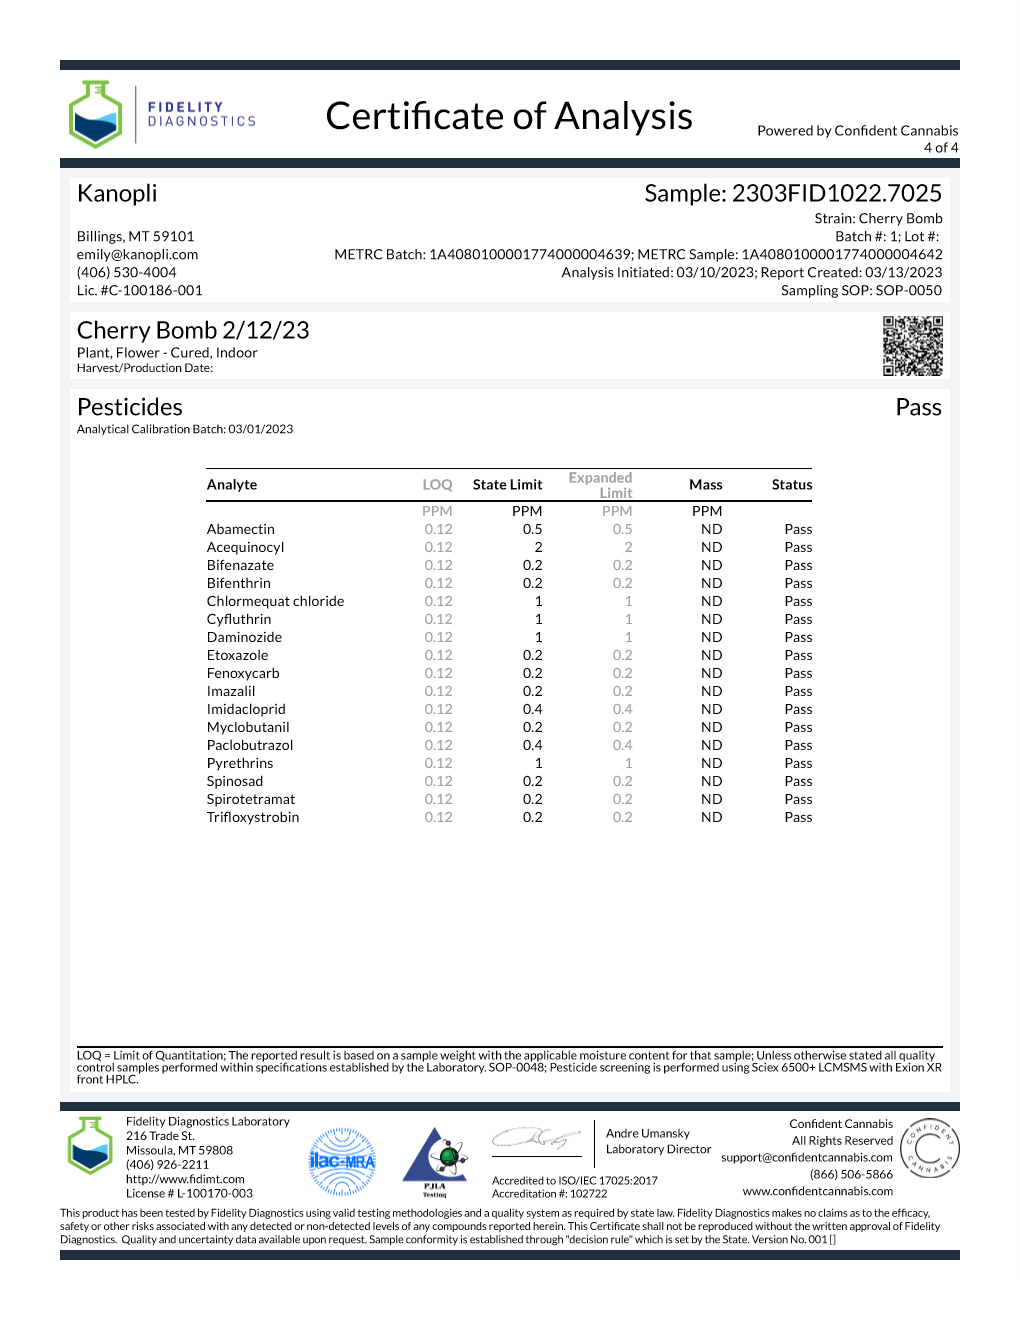 Adult Use - Cherry Bomb - Hybrid 28.56% THC (Feb. 2023)